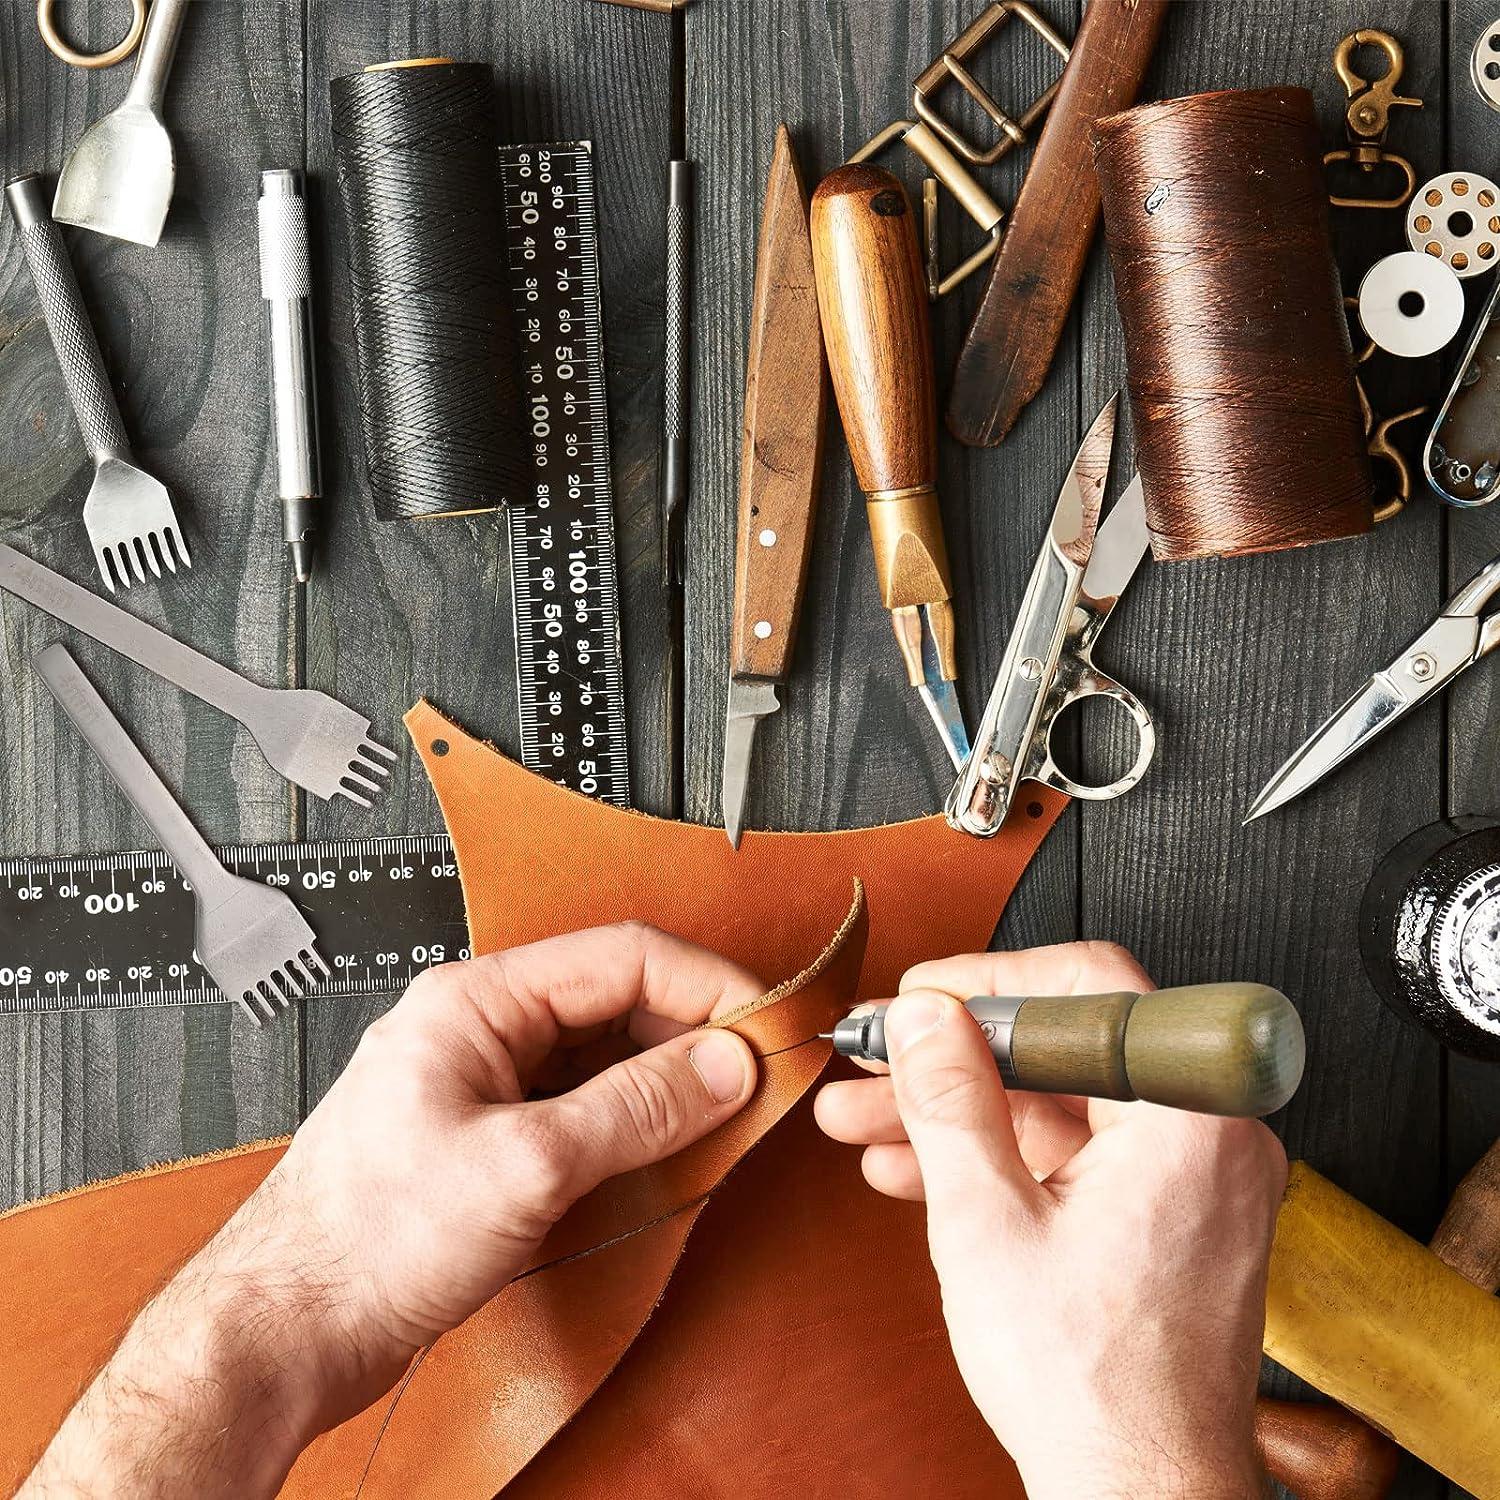 30 Pcs Upholstery Repair Kit, Leather Sewing Repair Kit With